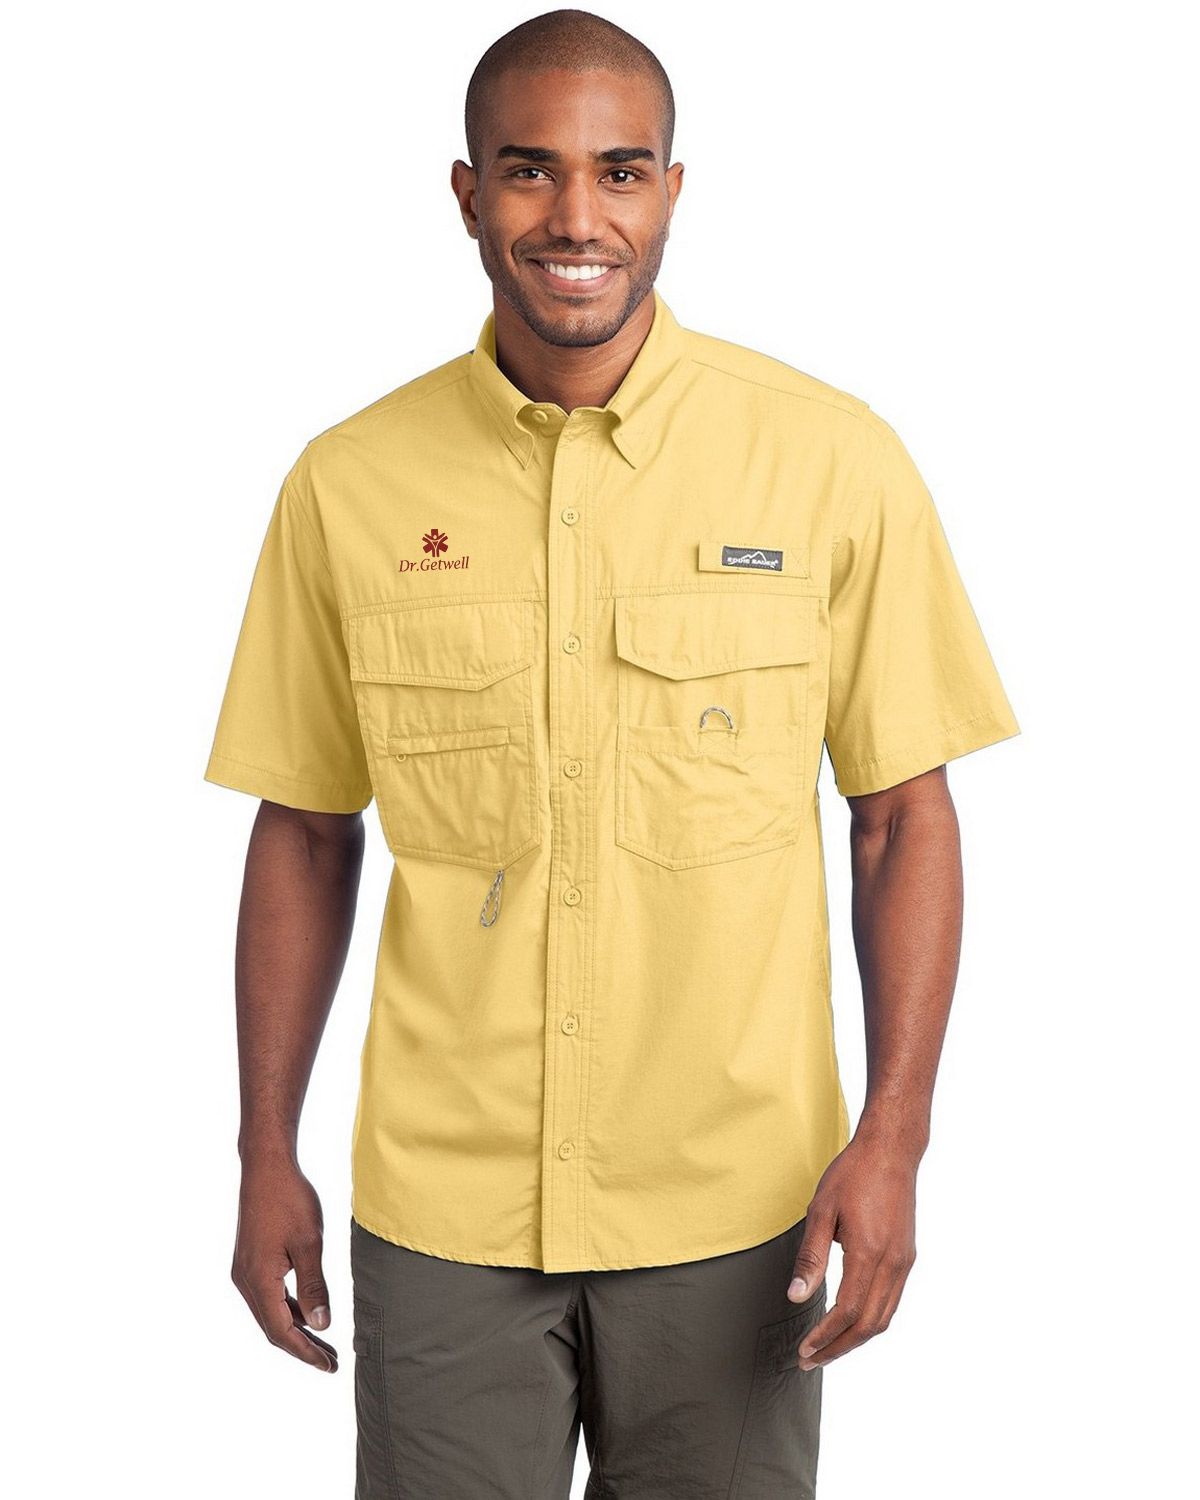 Eddie Bauer ® - Short Sleeve Fishing Shirt. EB608 - Custom Shirt Shop